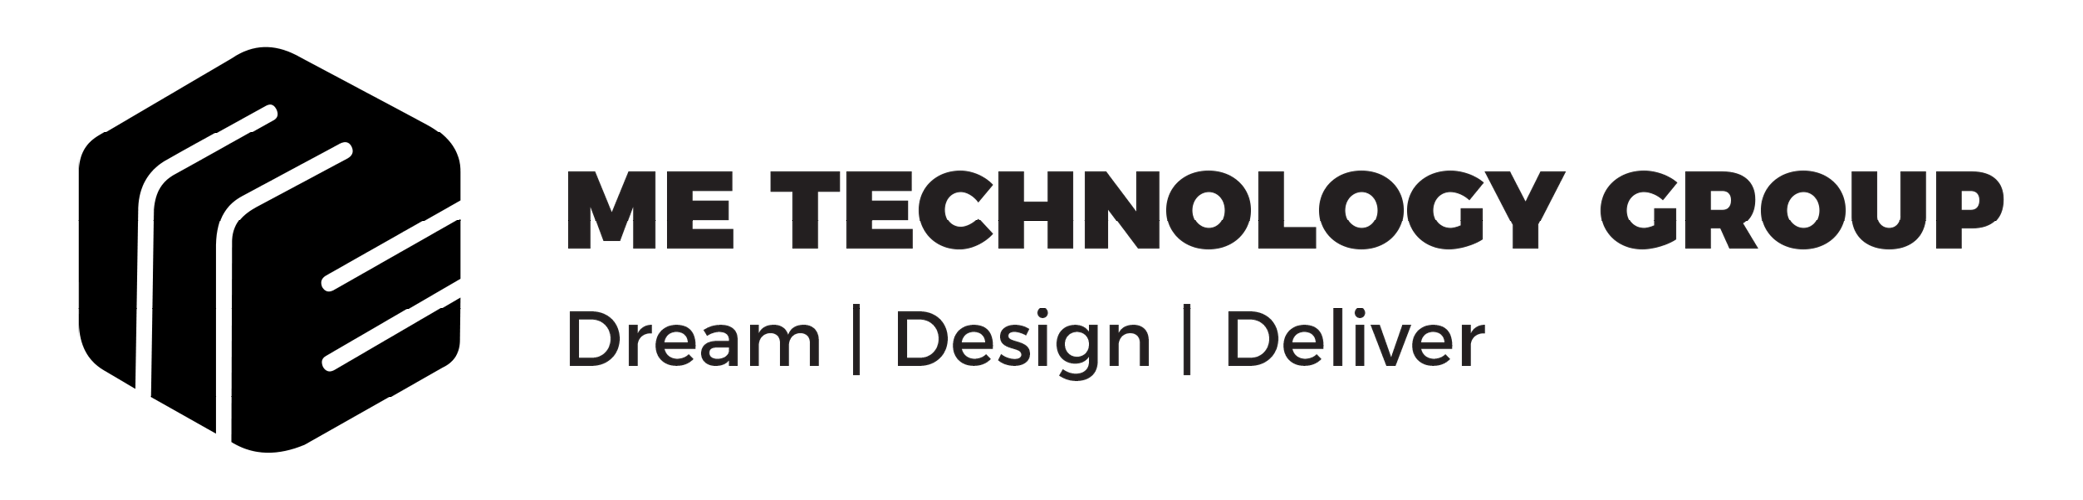 ME_Technology_Group_Logo_for_Website